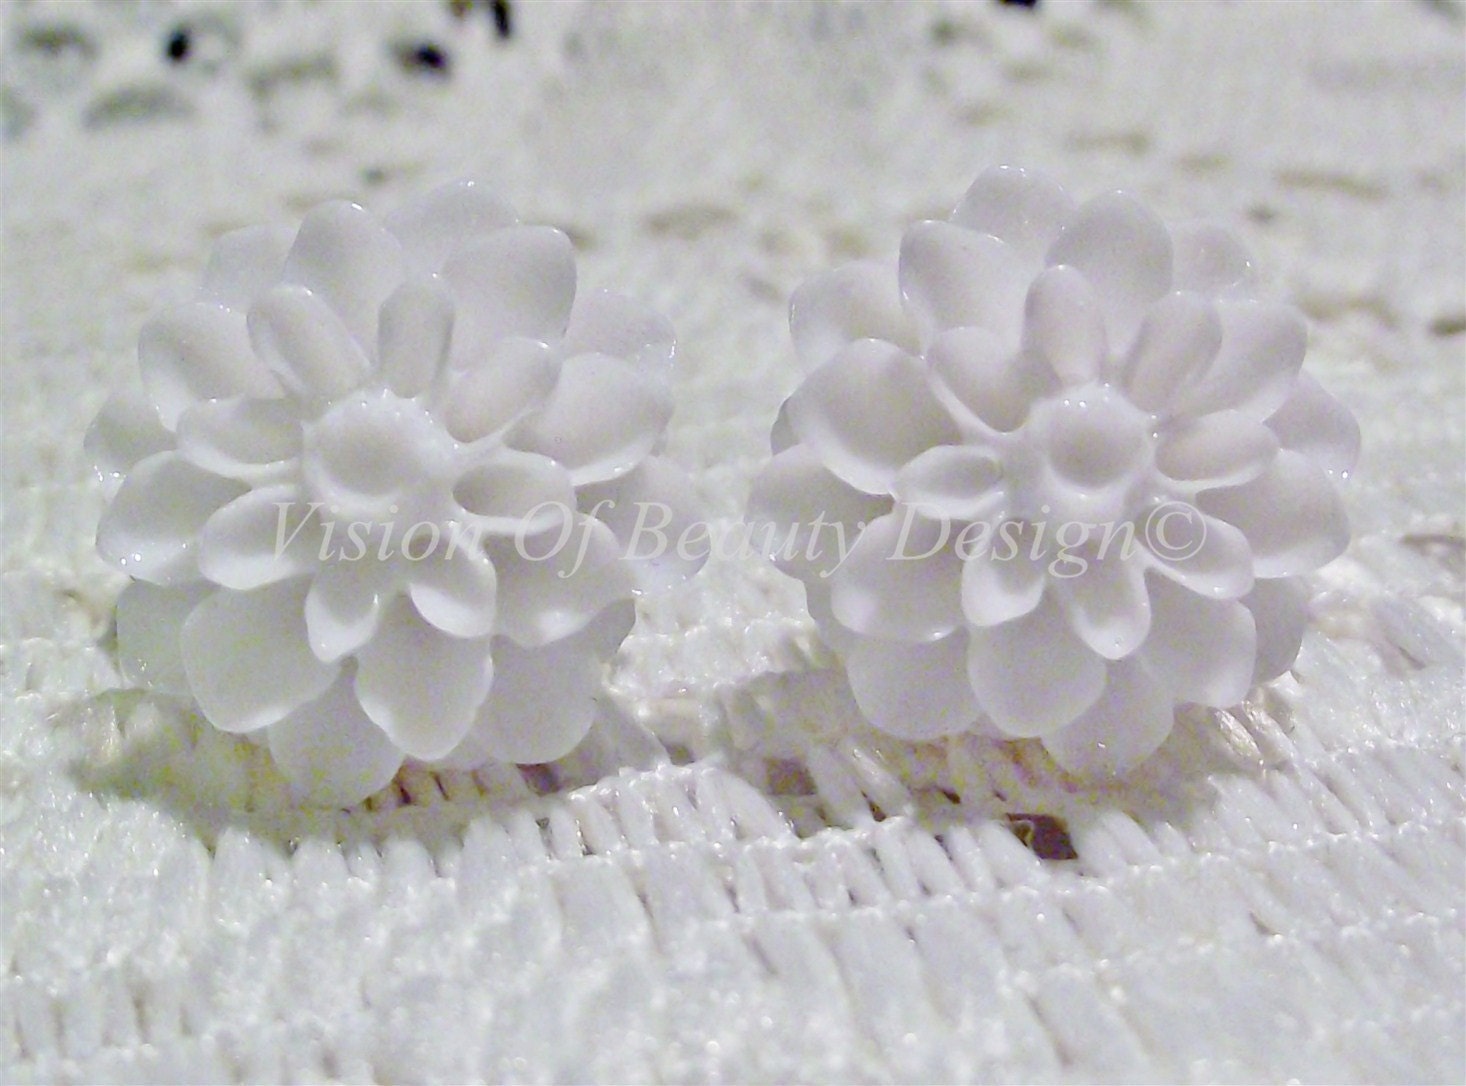 White Dahlia Chrysanthemum Flower Post by visionofbeautydesign